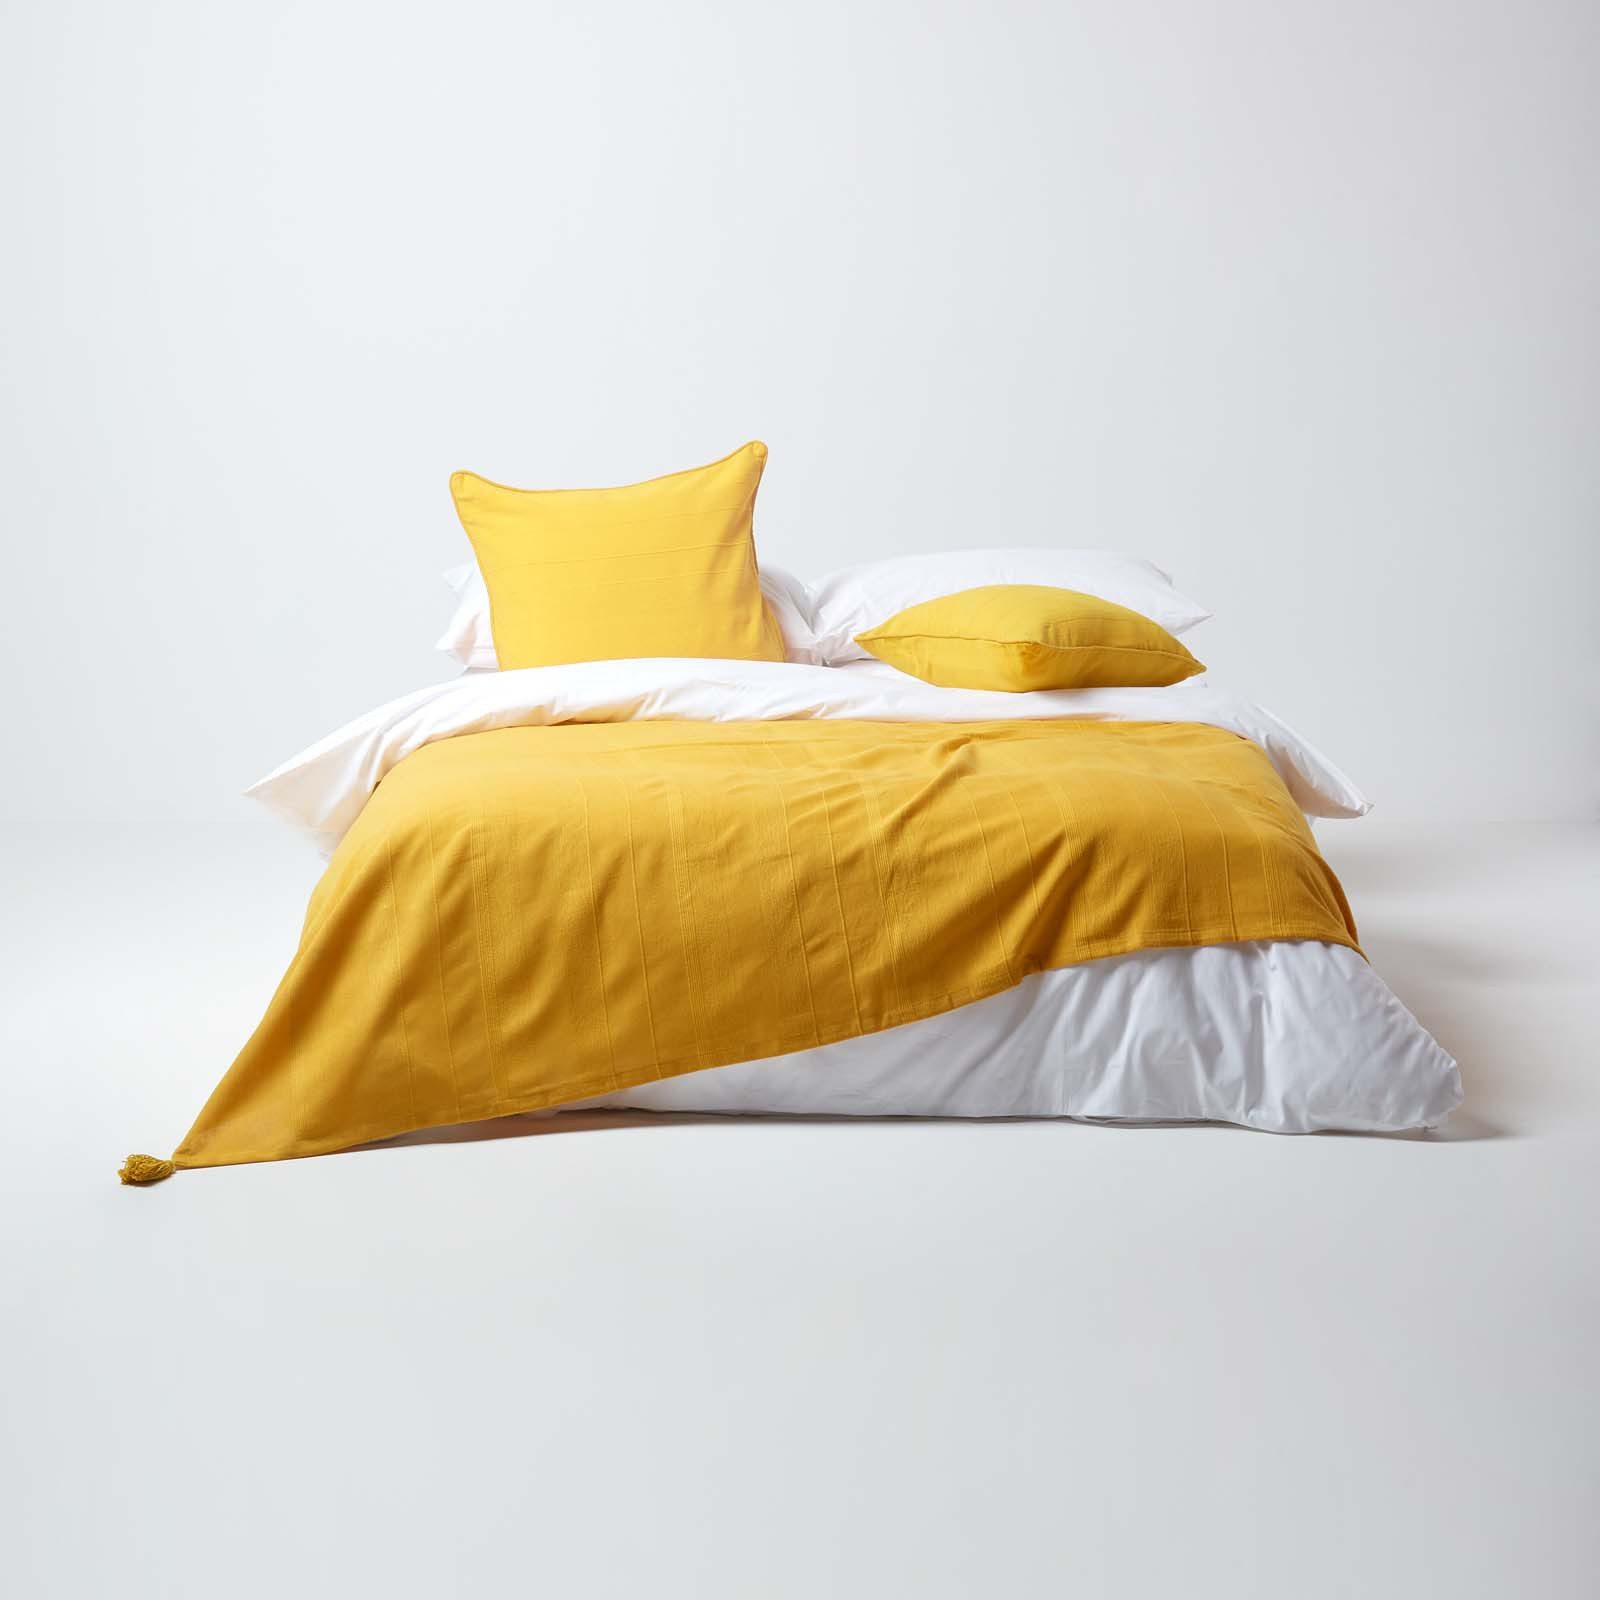 Plaid Tagesdecke Rajput, 100% Baumwolle, gelb, 255 x 360 cm, Homescapes